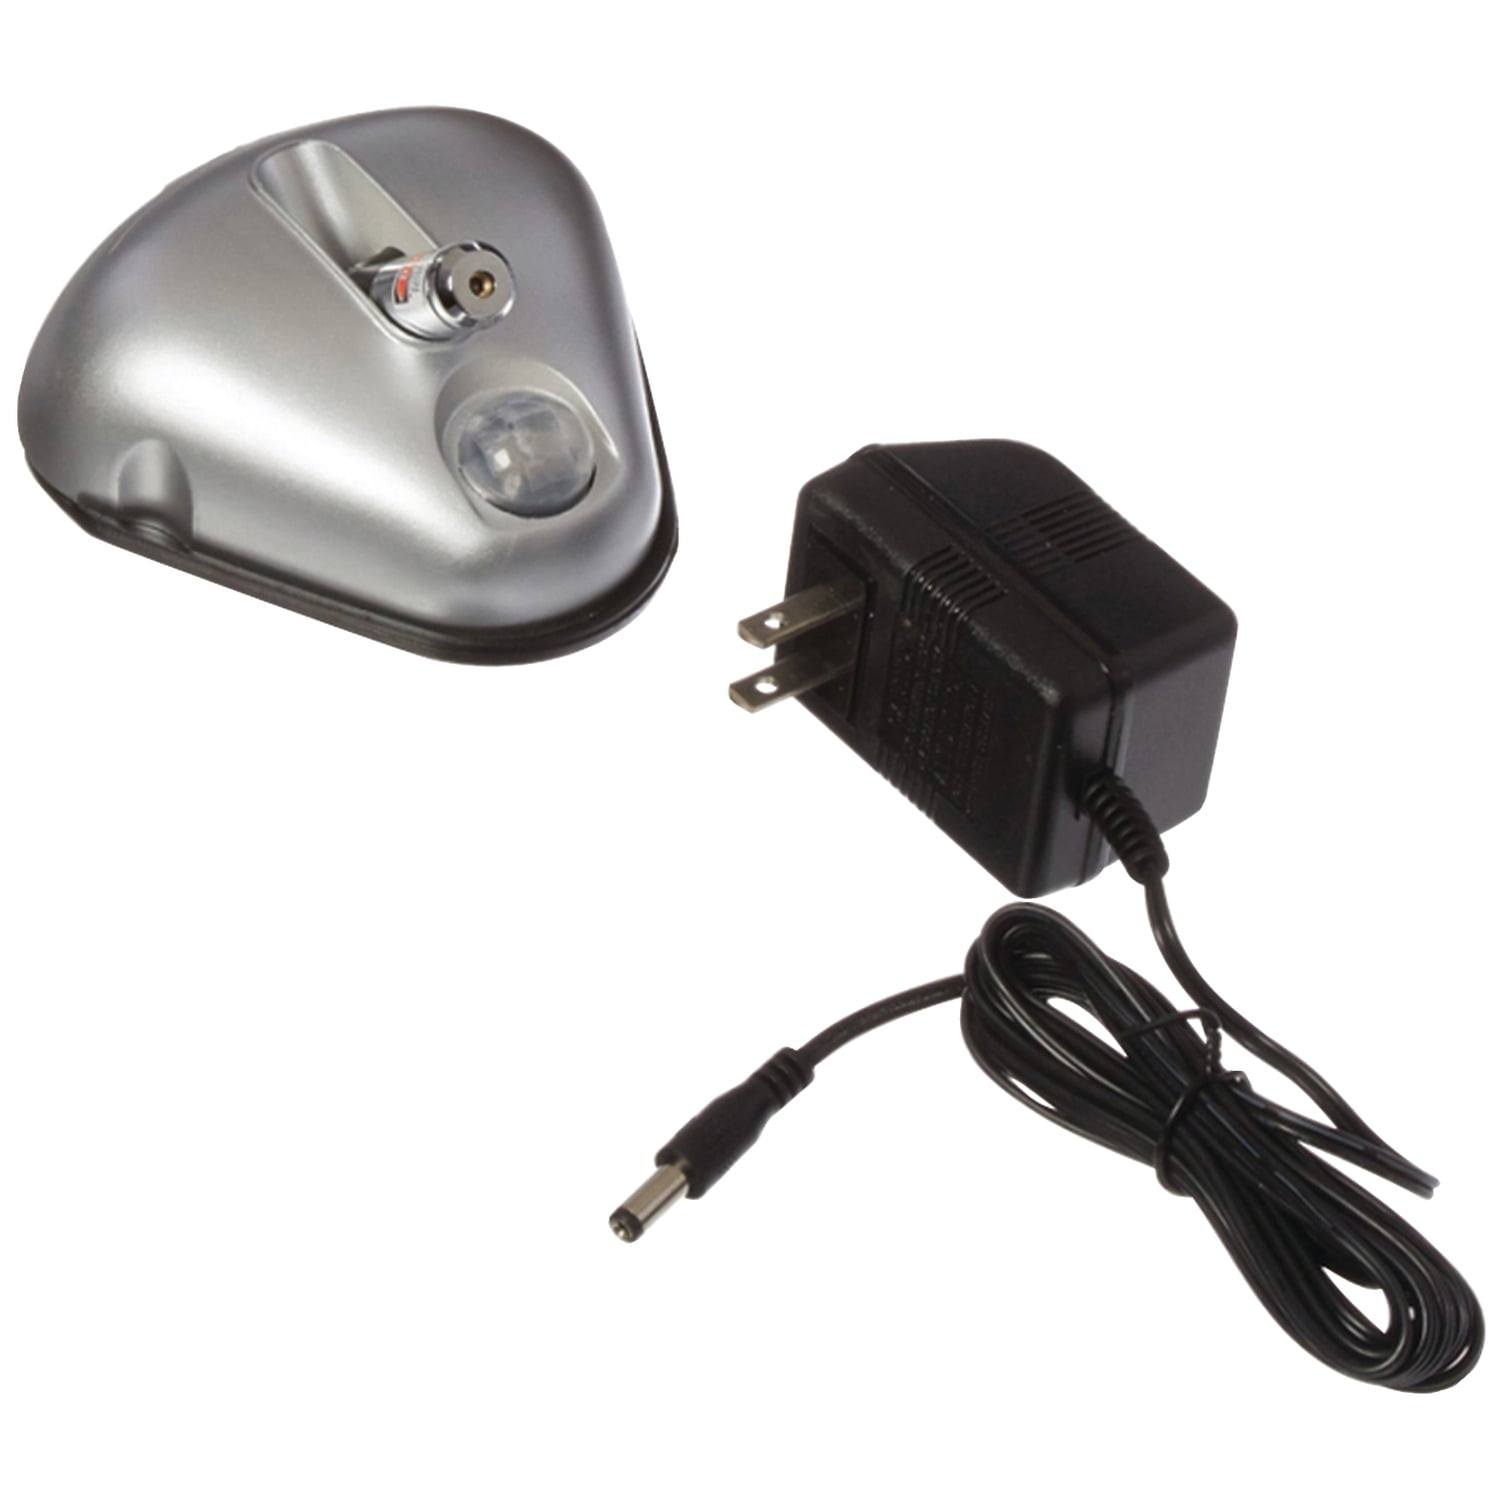 Ridecle Parking Sensor Dual Laser Garage Parking Assist Guide System,360-degree Adjustable Parking Sensor with AC Adapter and Battery Backup for Car